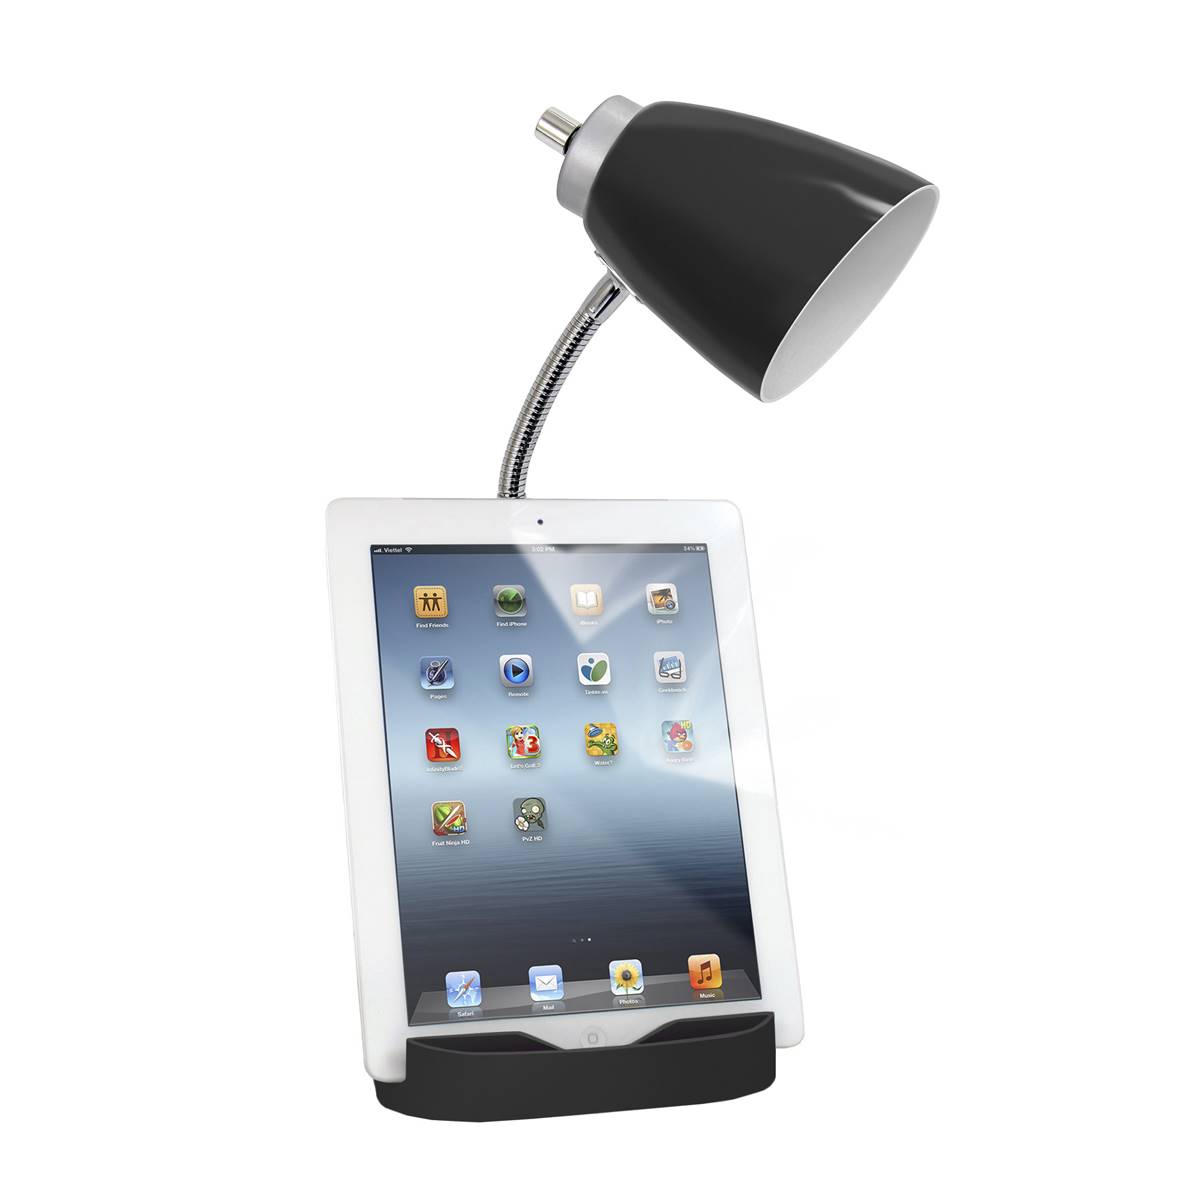 LimeLights Gooseneck USB Port Organizer Desk Lamp